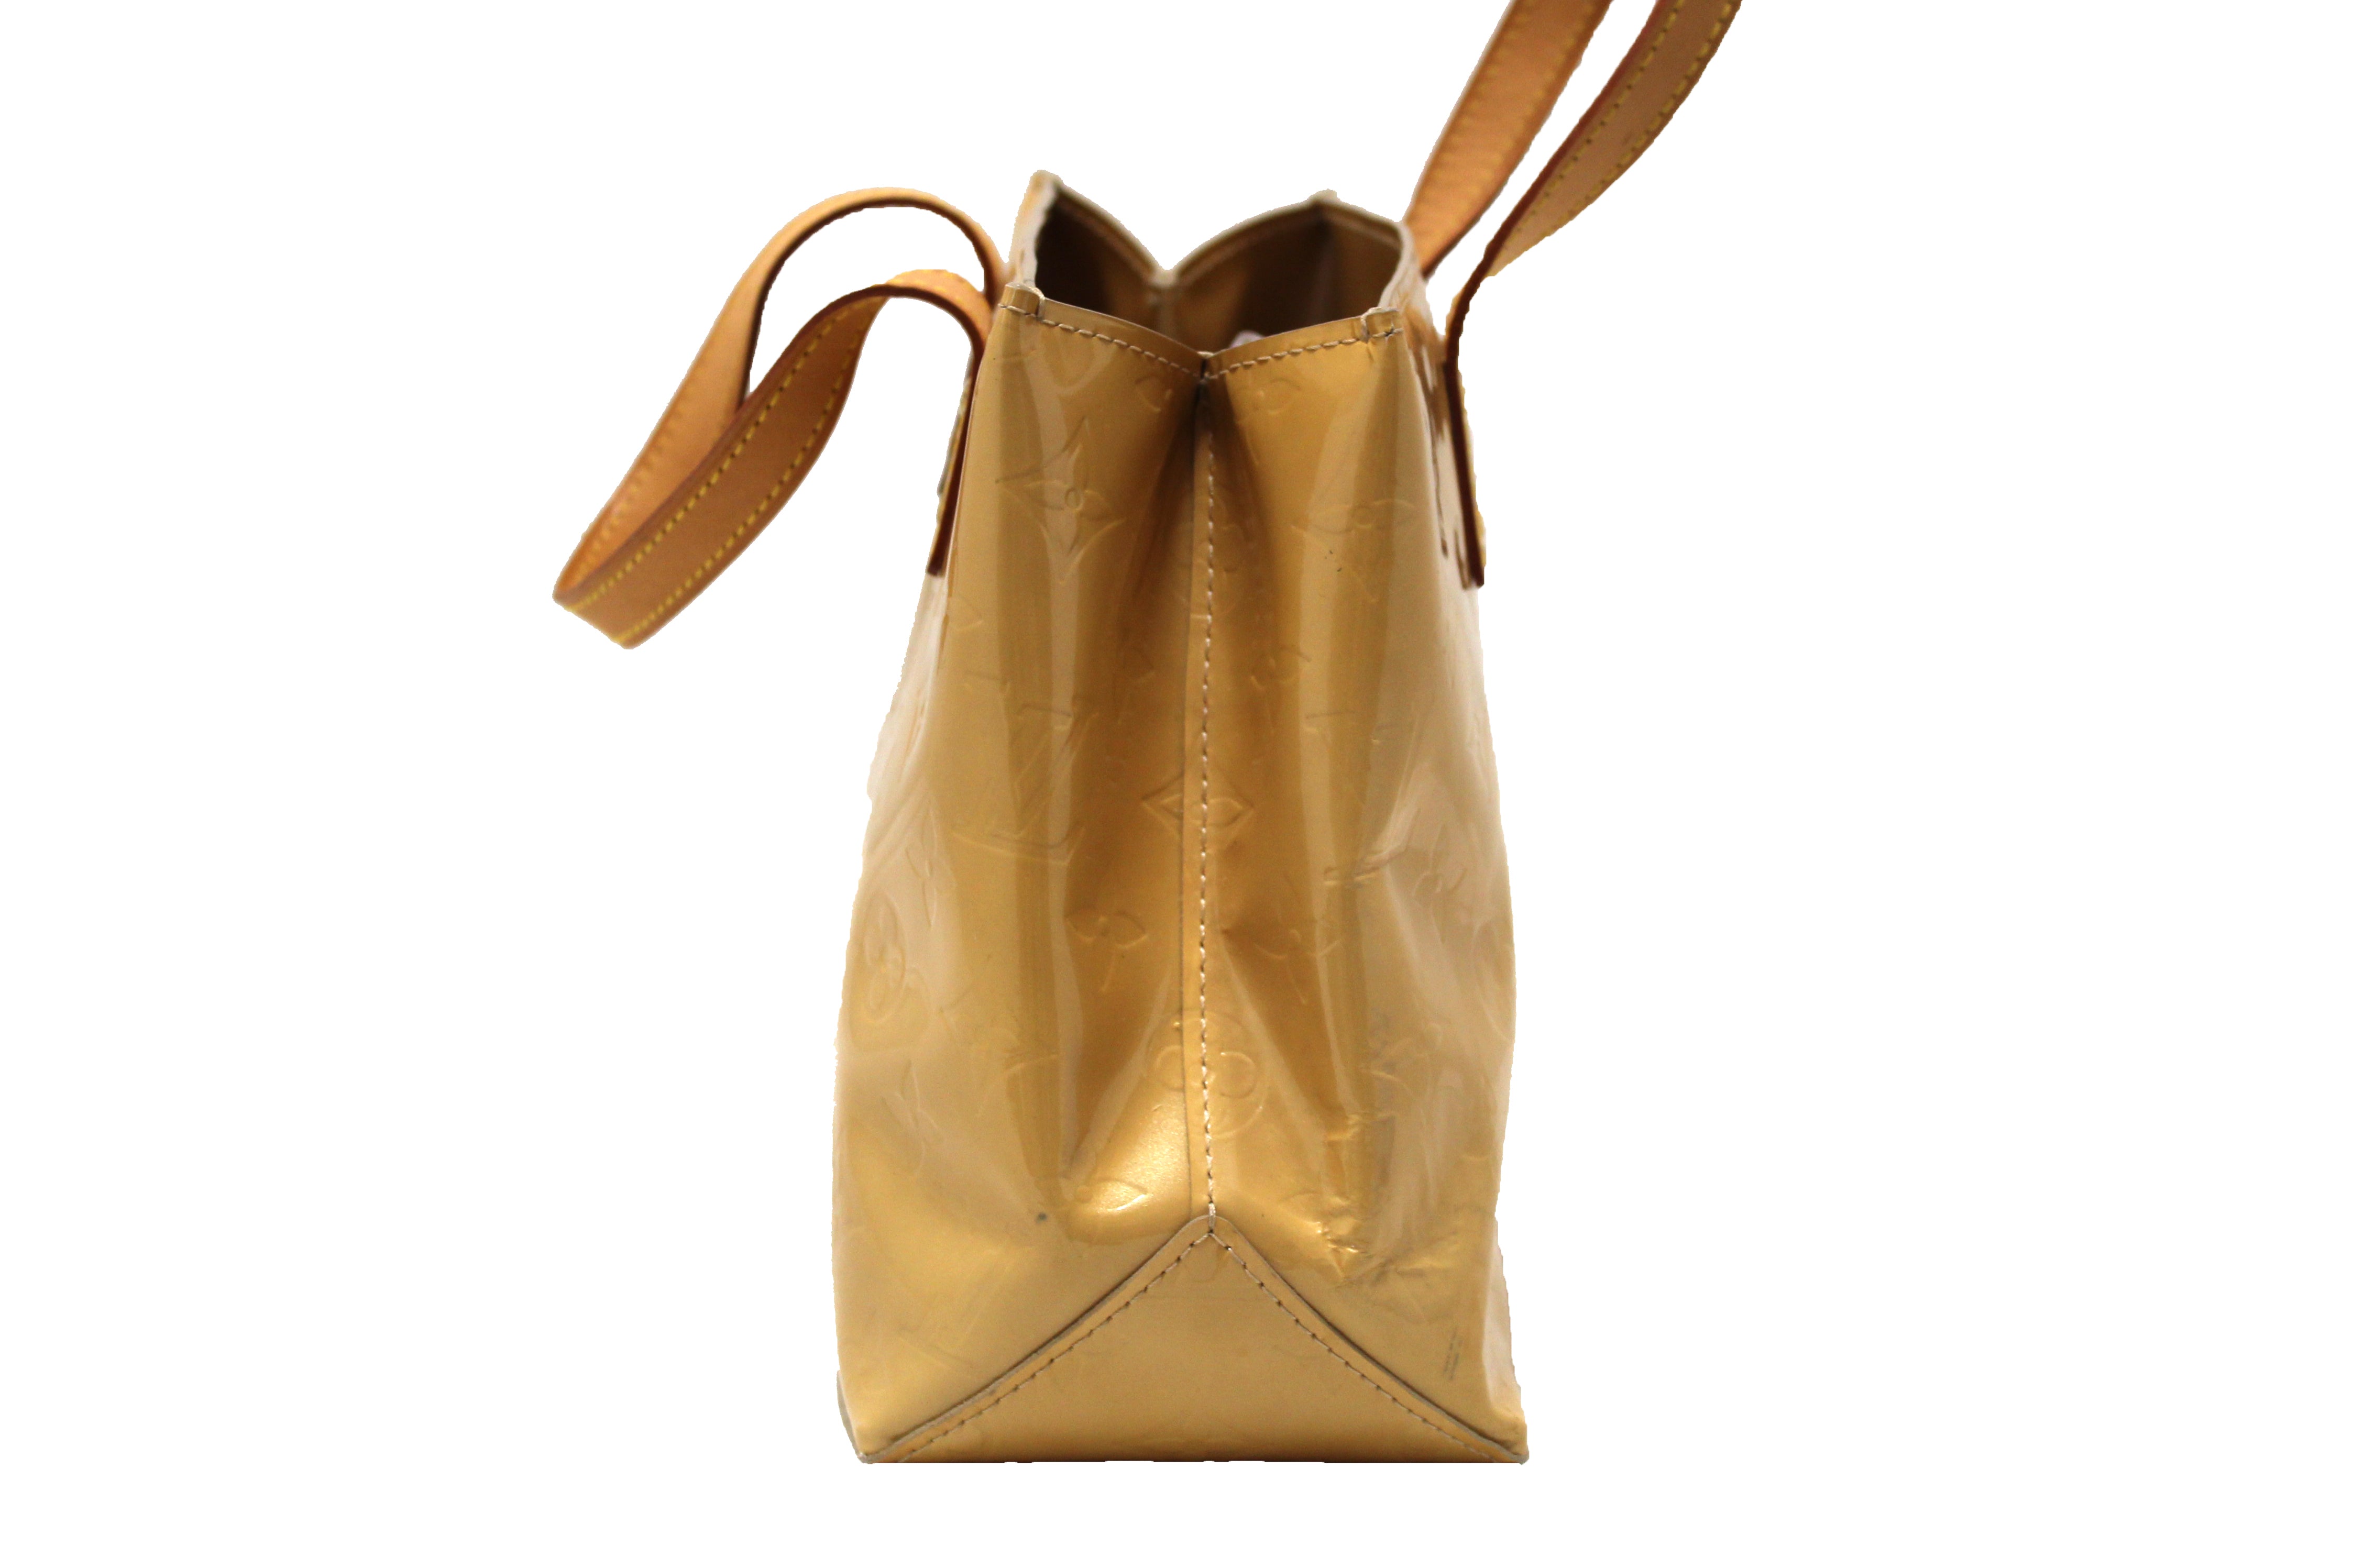 Bréa patent leather handbag Louis Vuitton Beige in Patent leather - 26551324